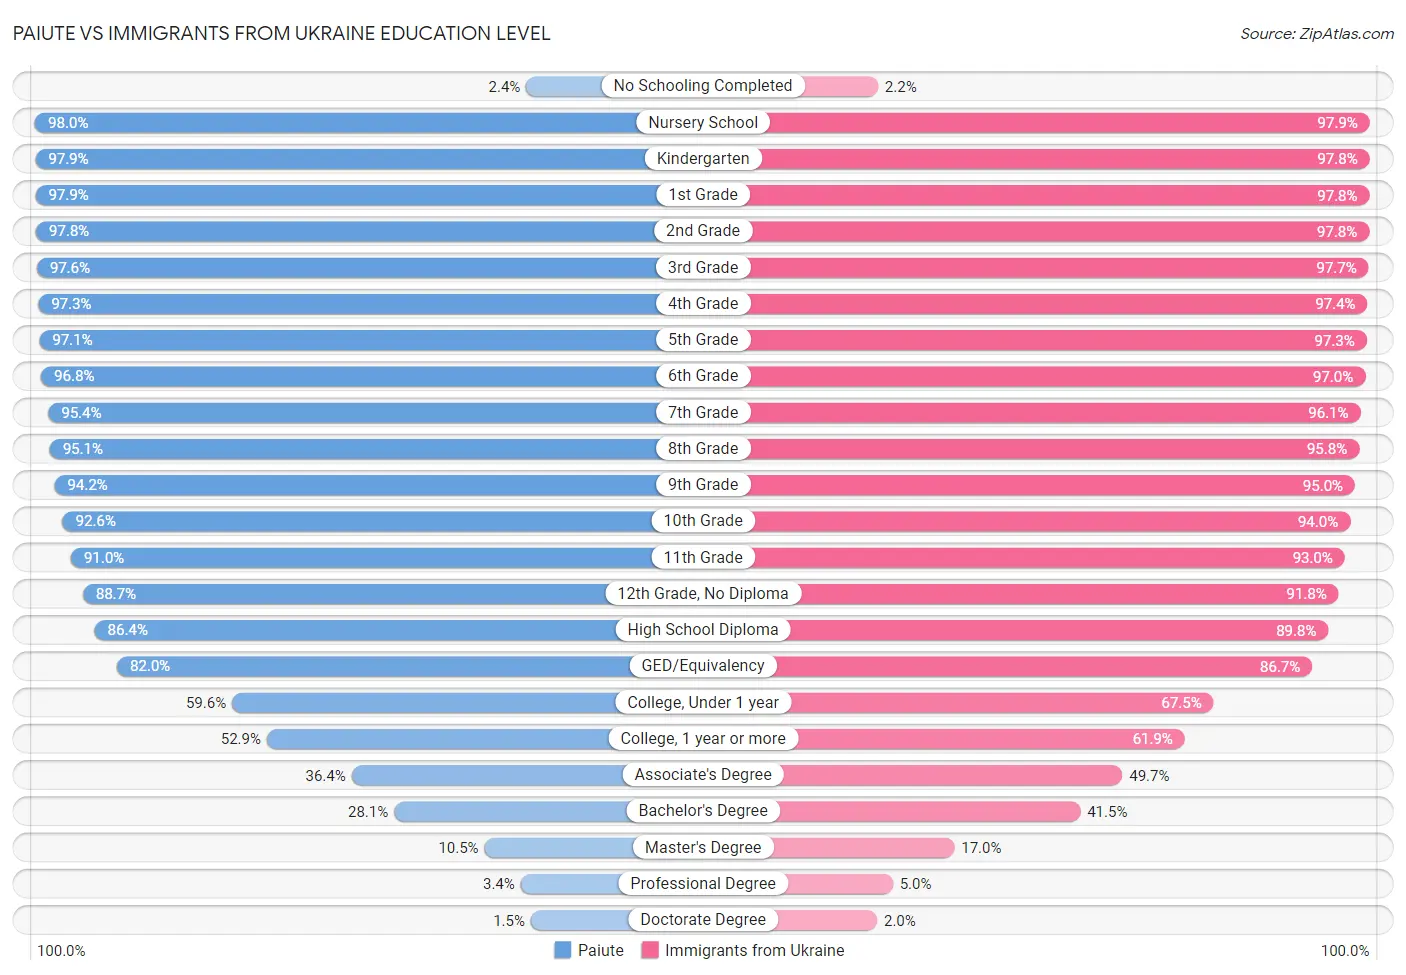 Paiute vs Immigrants from Ukraine Education Level